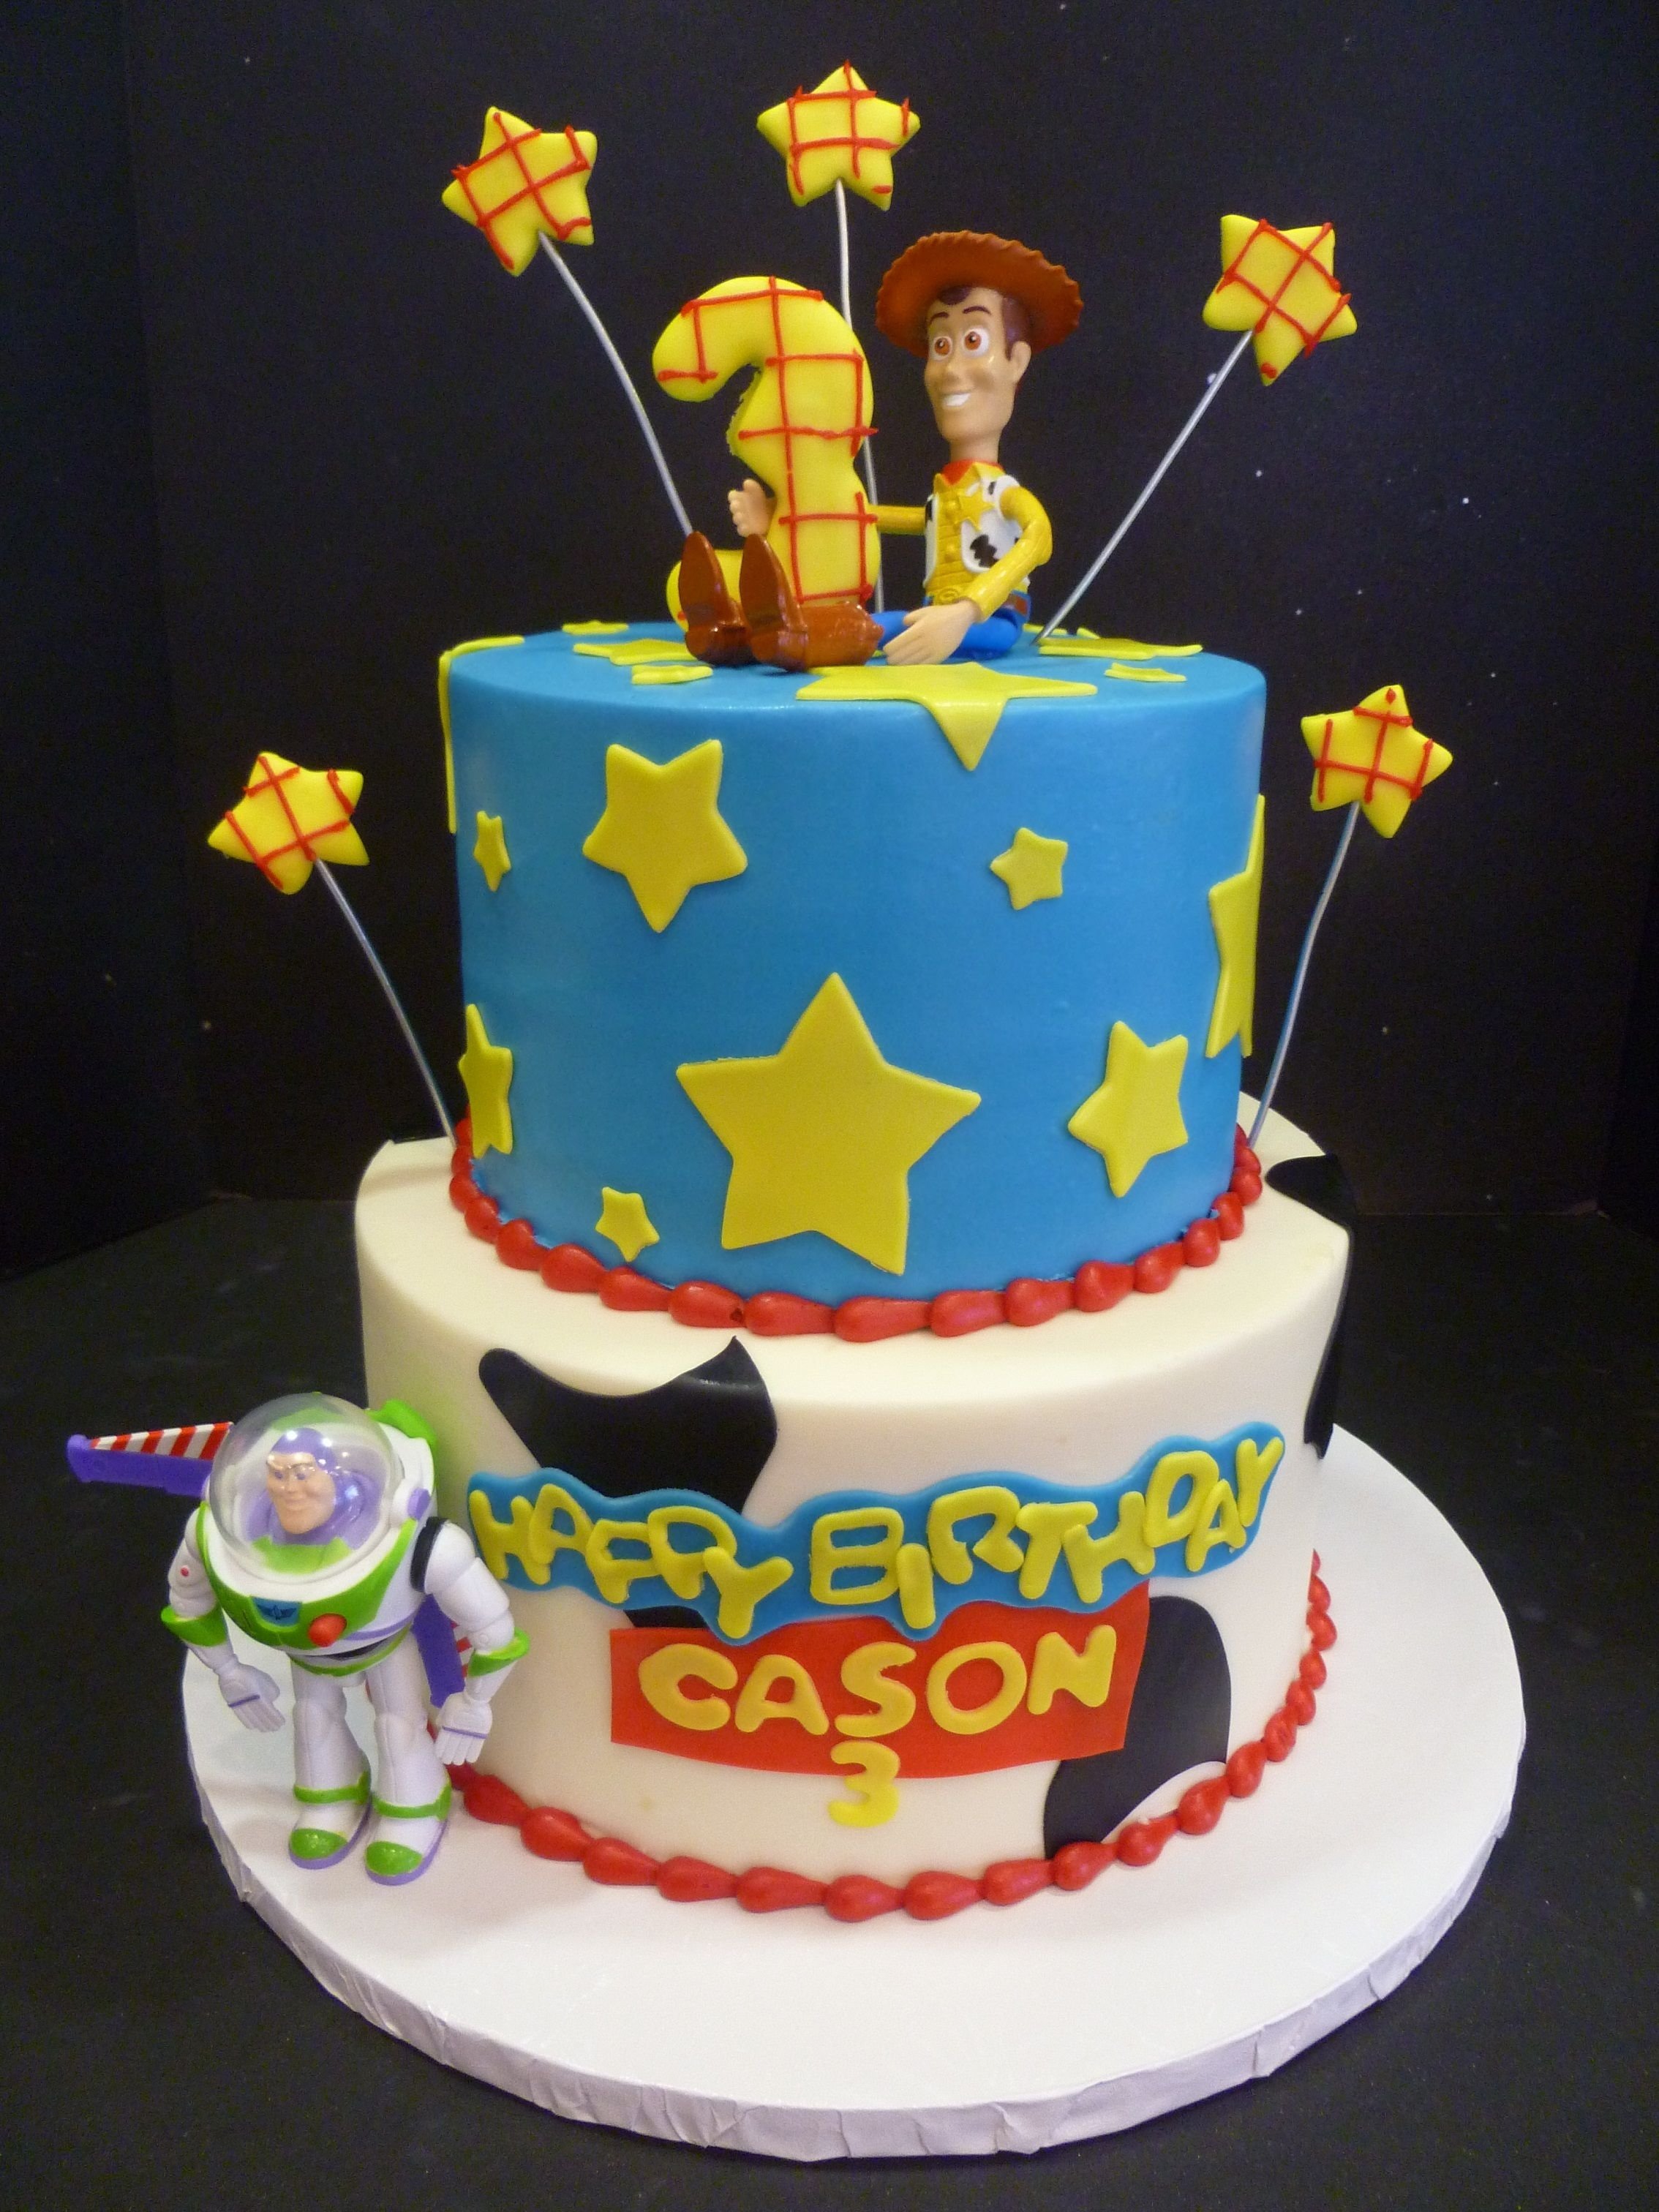 10 Spectacular Toy Story Birthday Cake Ideas toy story cakes toy story themed cake outta the oven home etc 2022